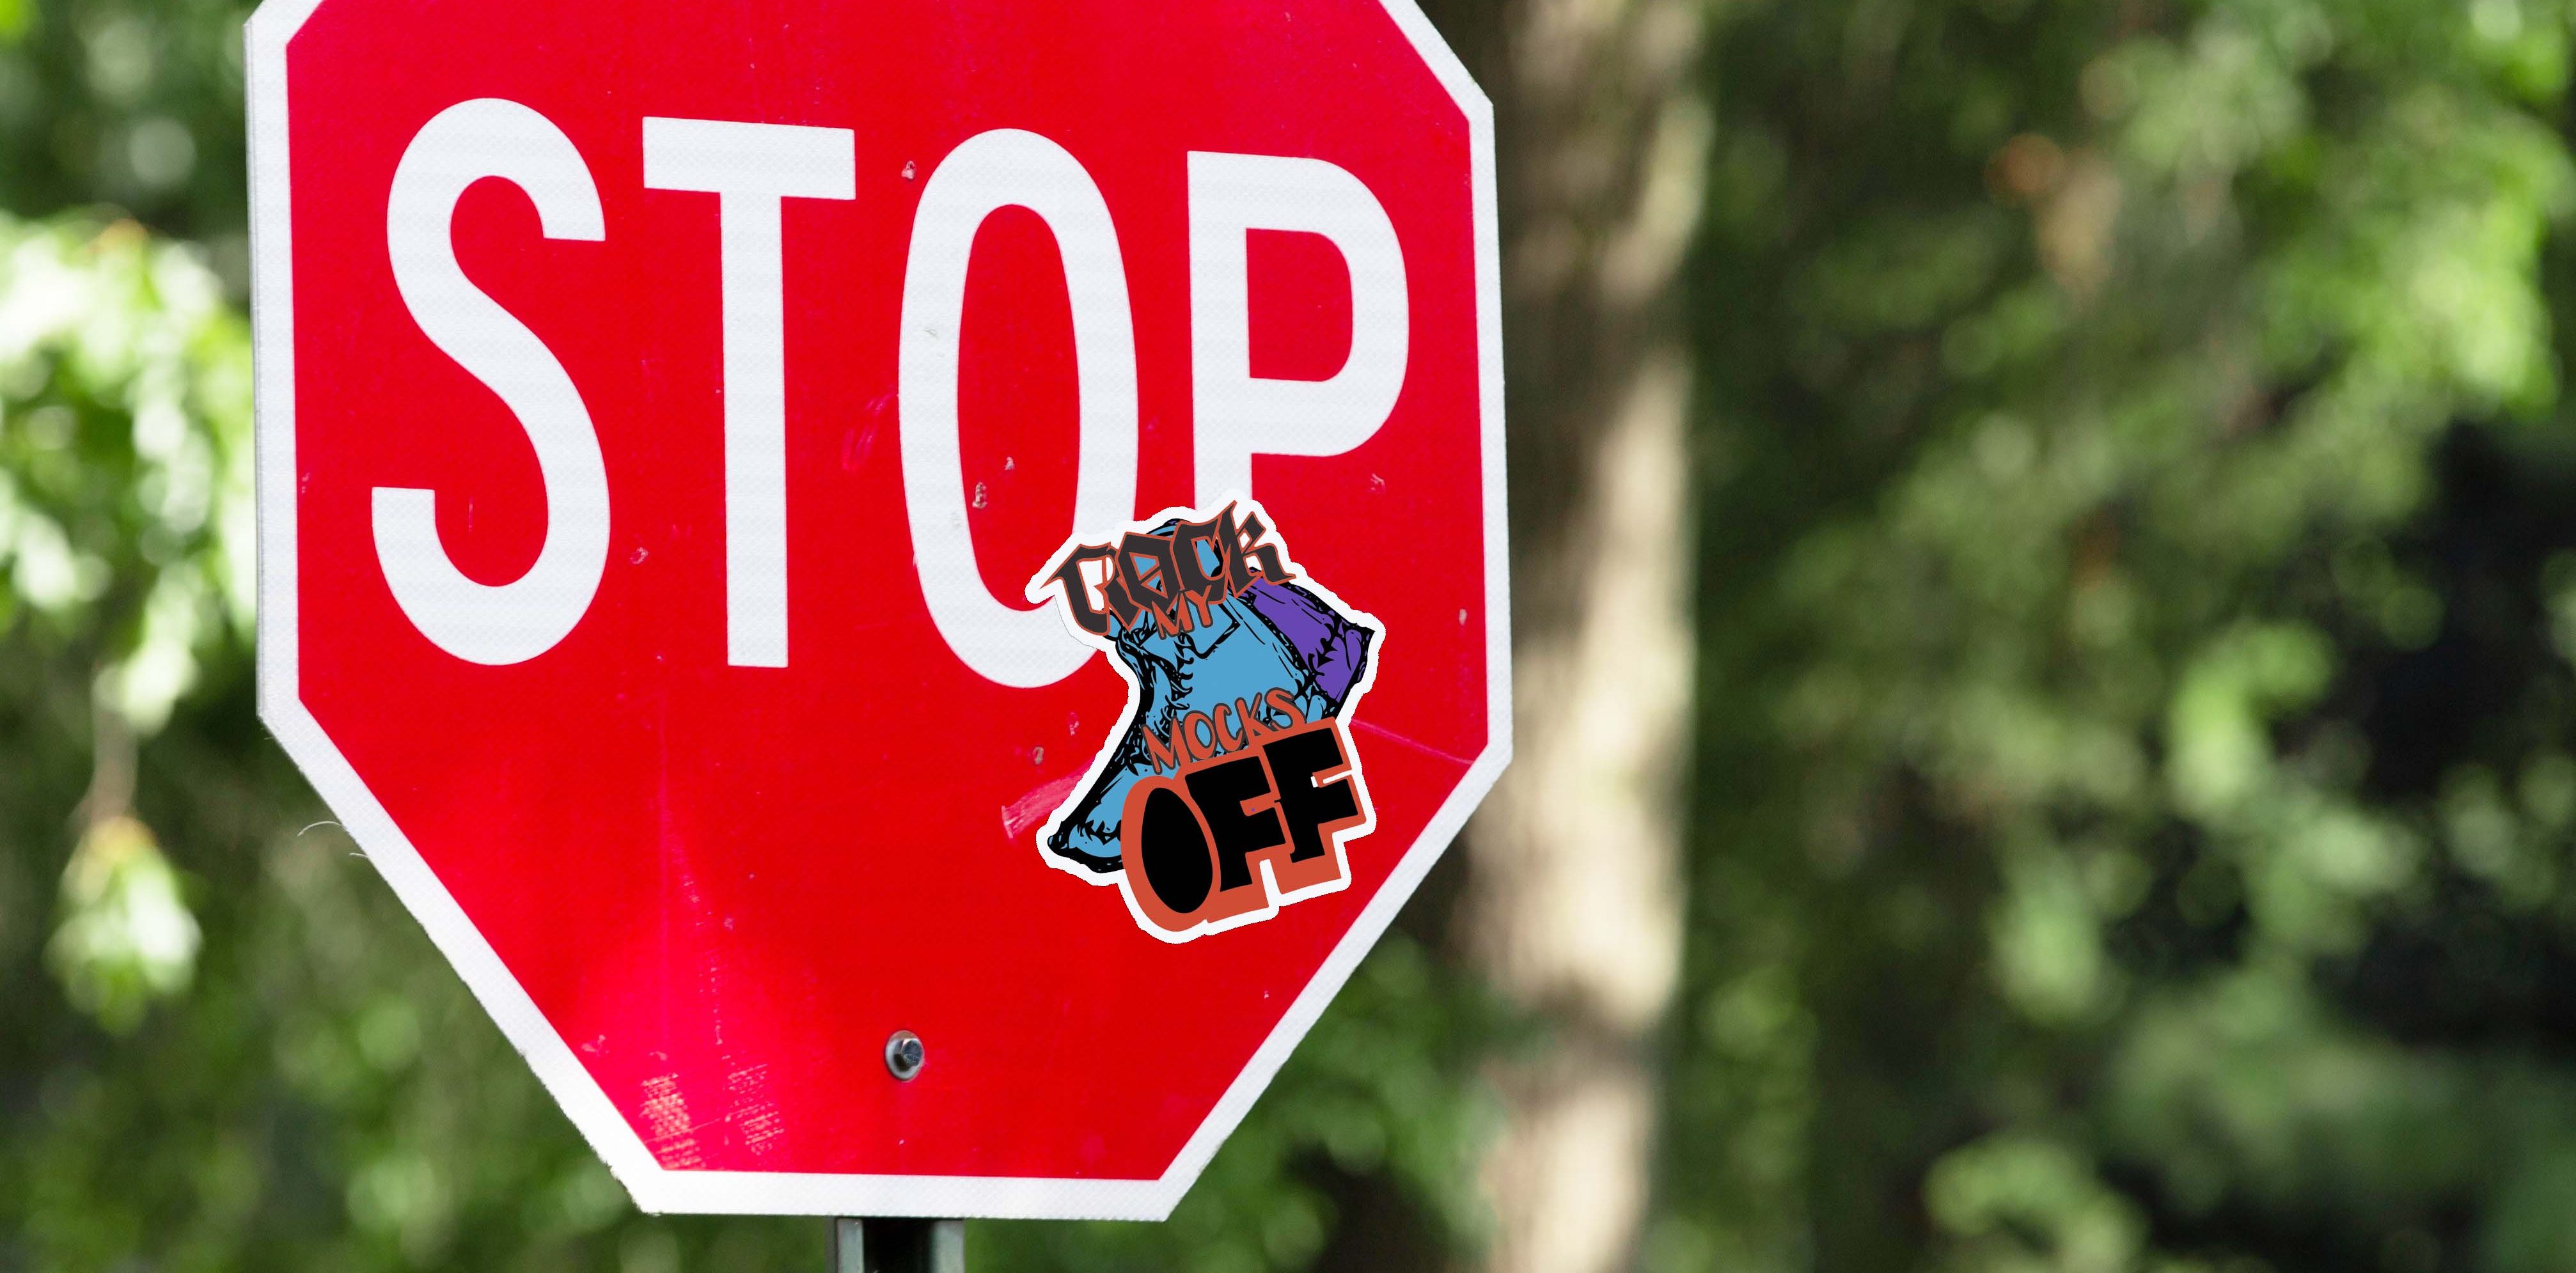 Rock my mocks off stop sign